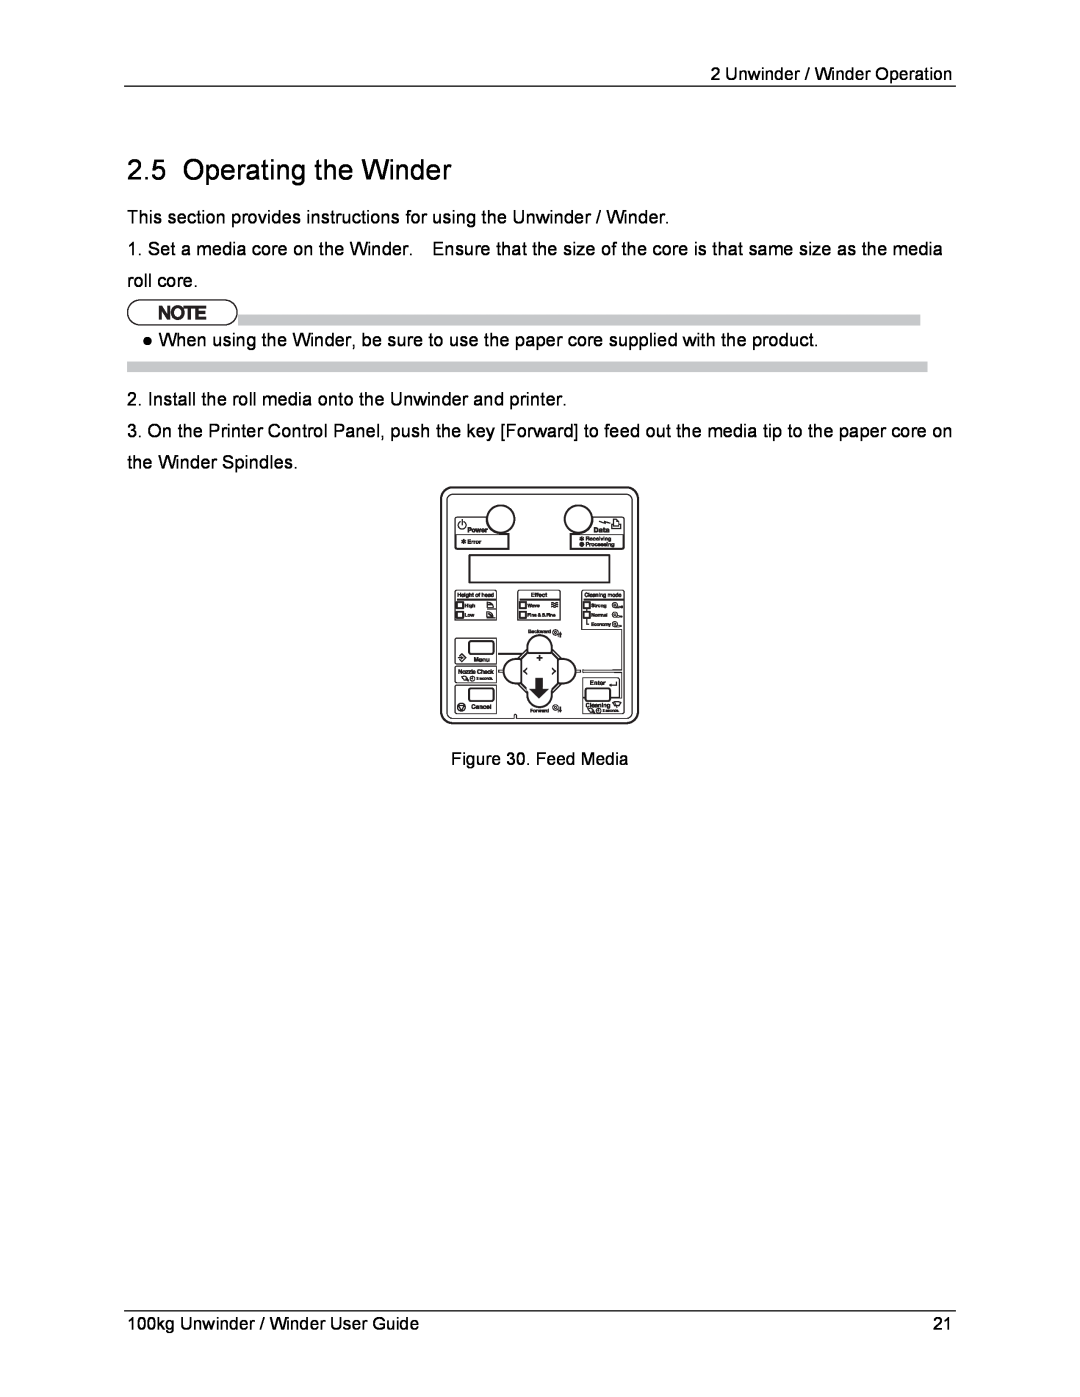 Xerox 8254E, 8264E manual Operating the Winder, Unwinder / Winder Operation, Feed Media, 100kg Unwinder / Winder User Guide 